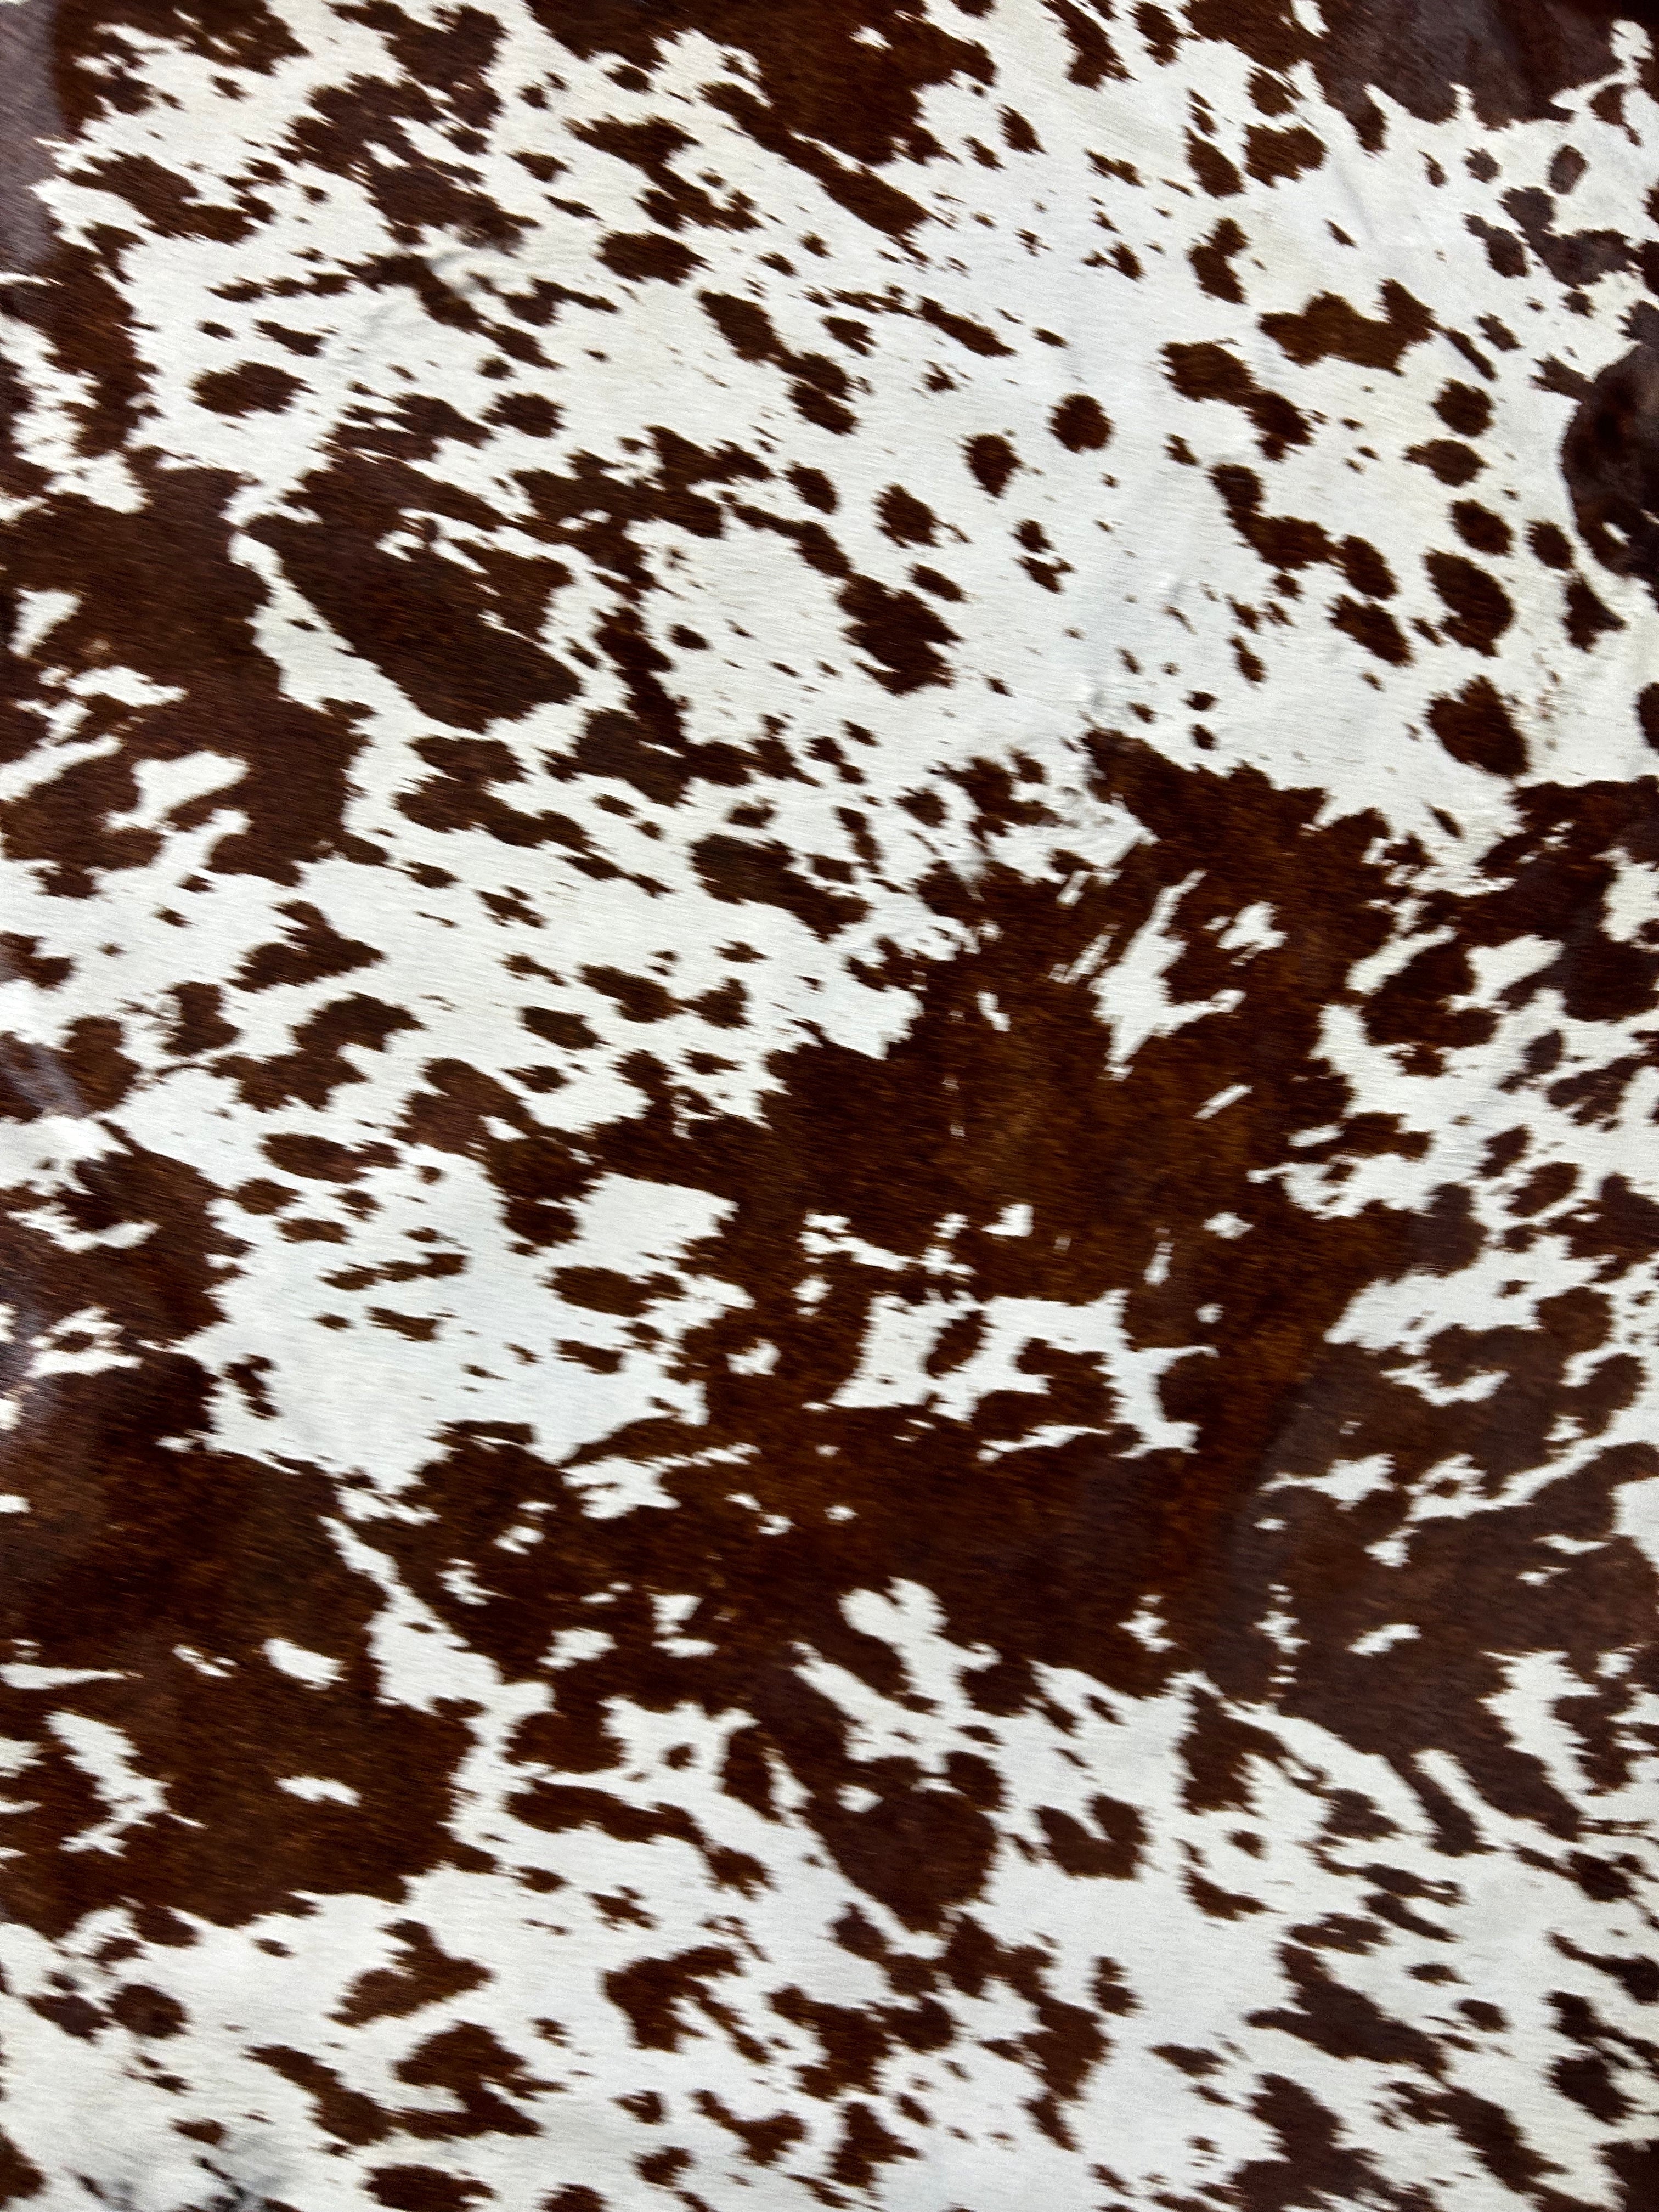 Brown & White Printed Cowhide Rug Size: 7.2x7 feet D-042